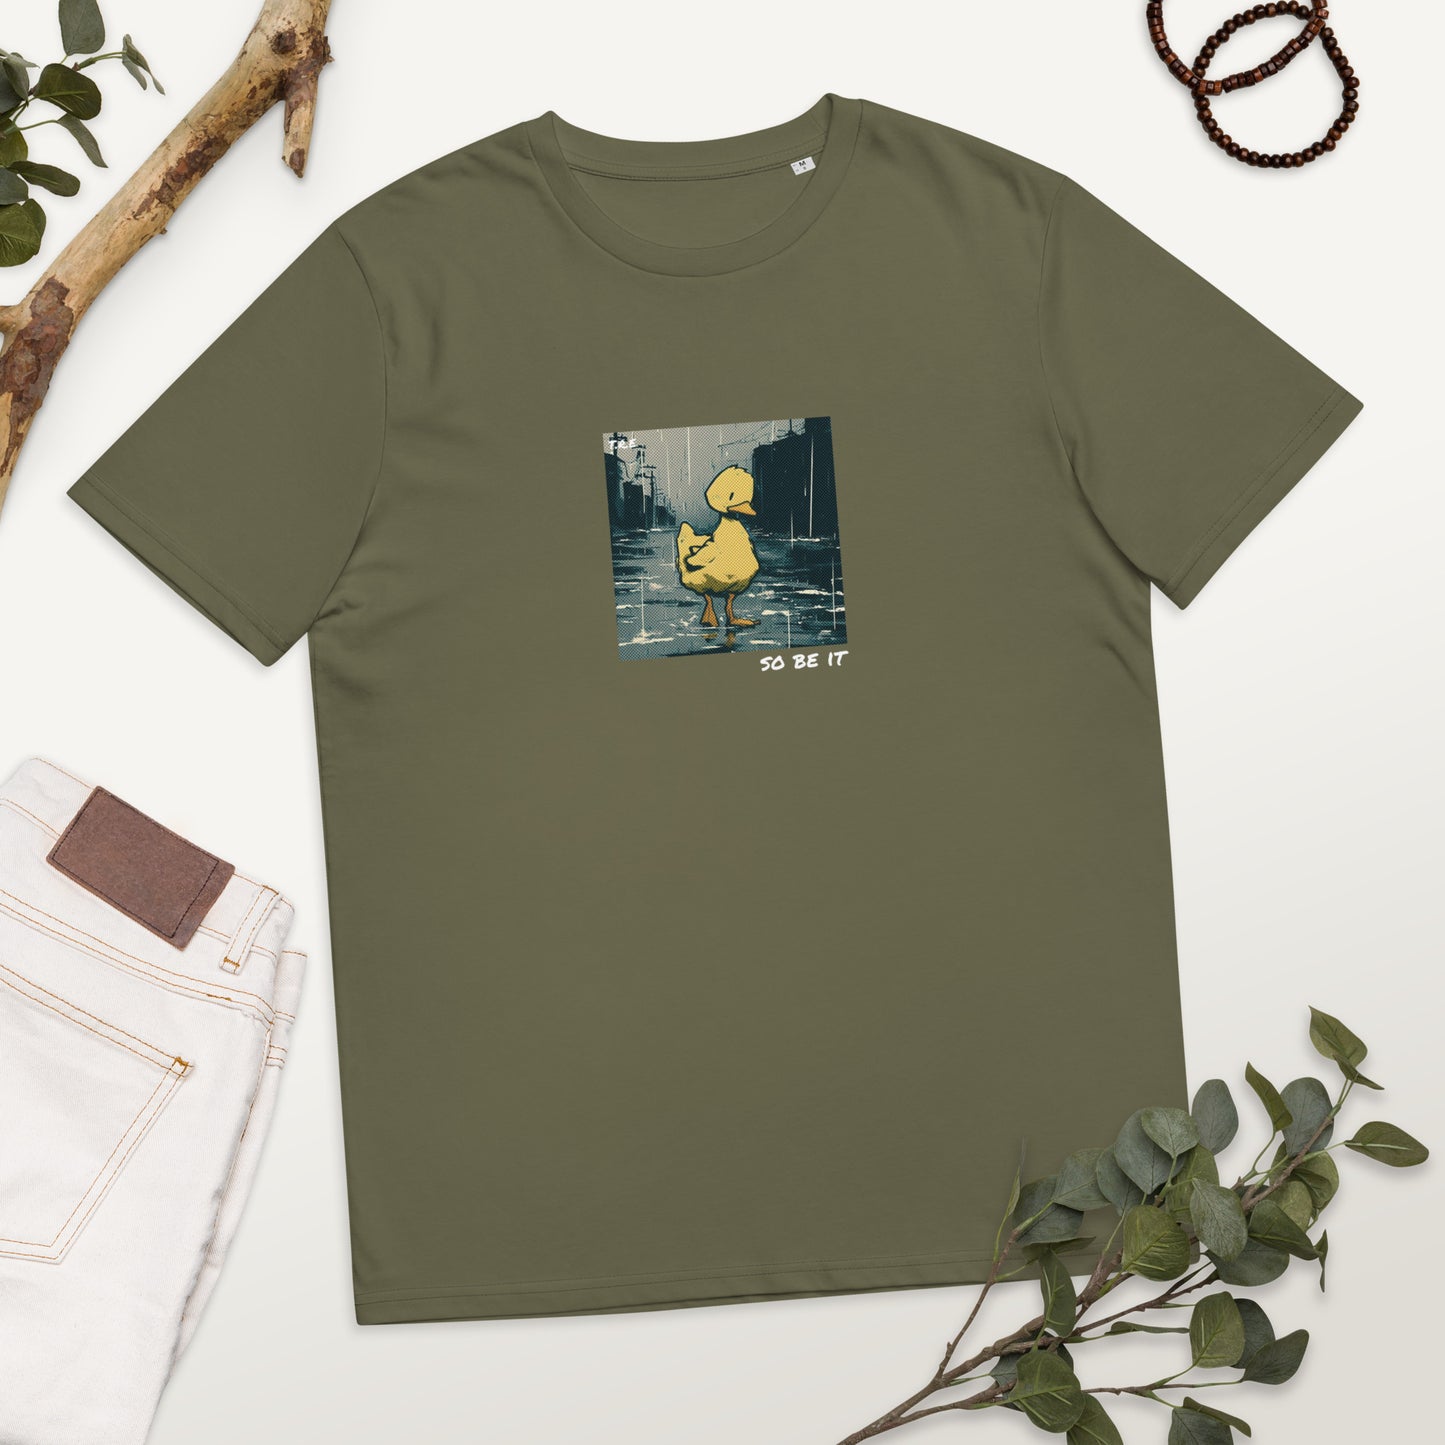 Unisex Organic Cotton T-Shirt - So Be It